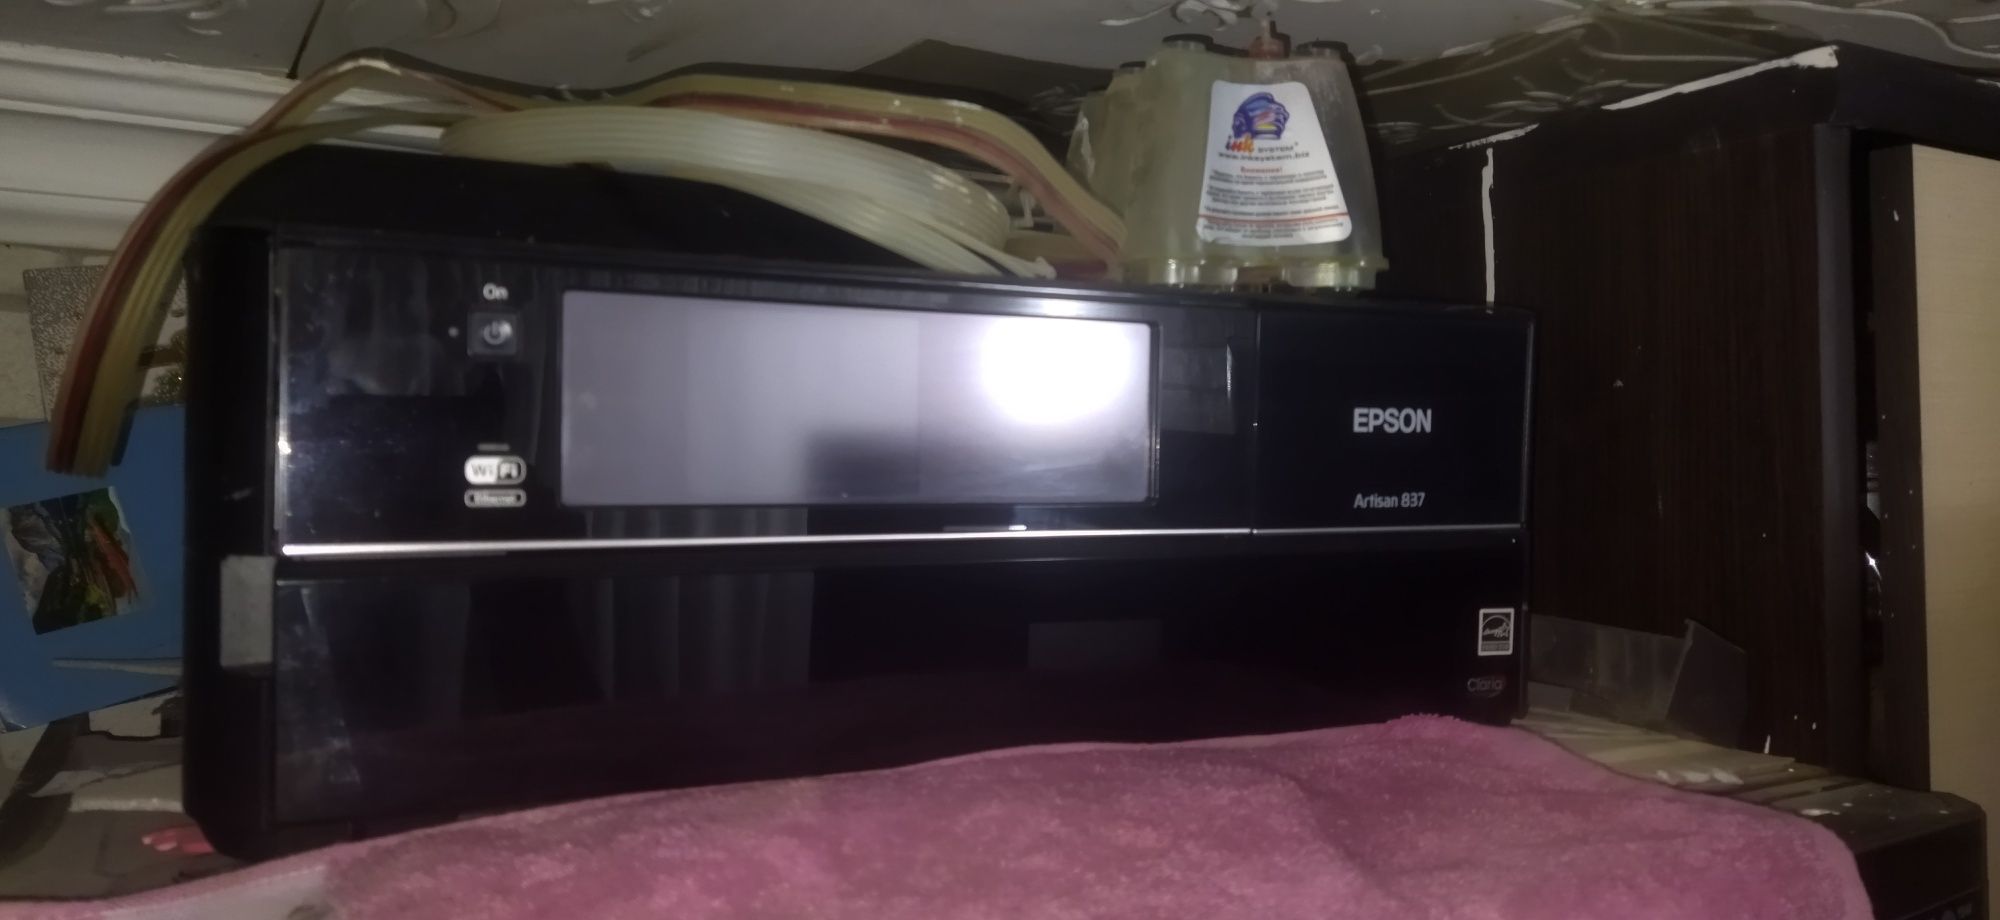 МФУ Epson Artisan 837 принтер три в одном